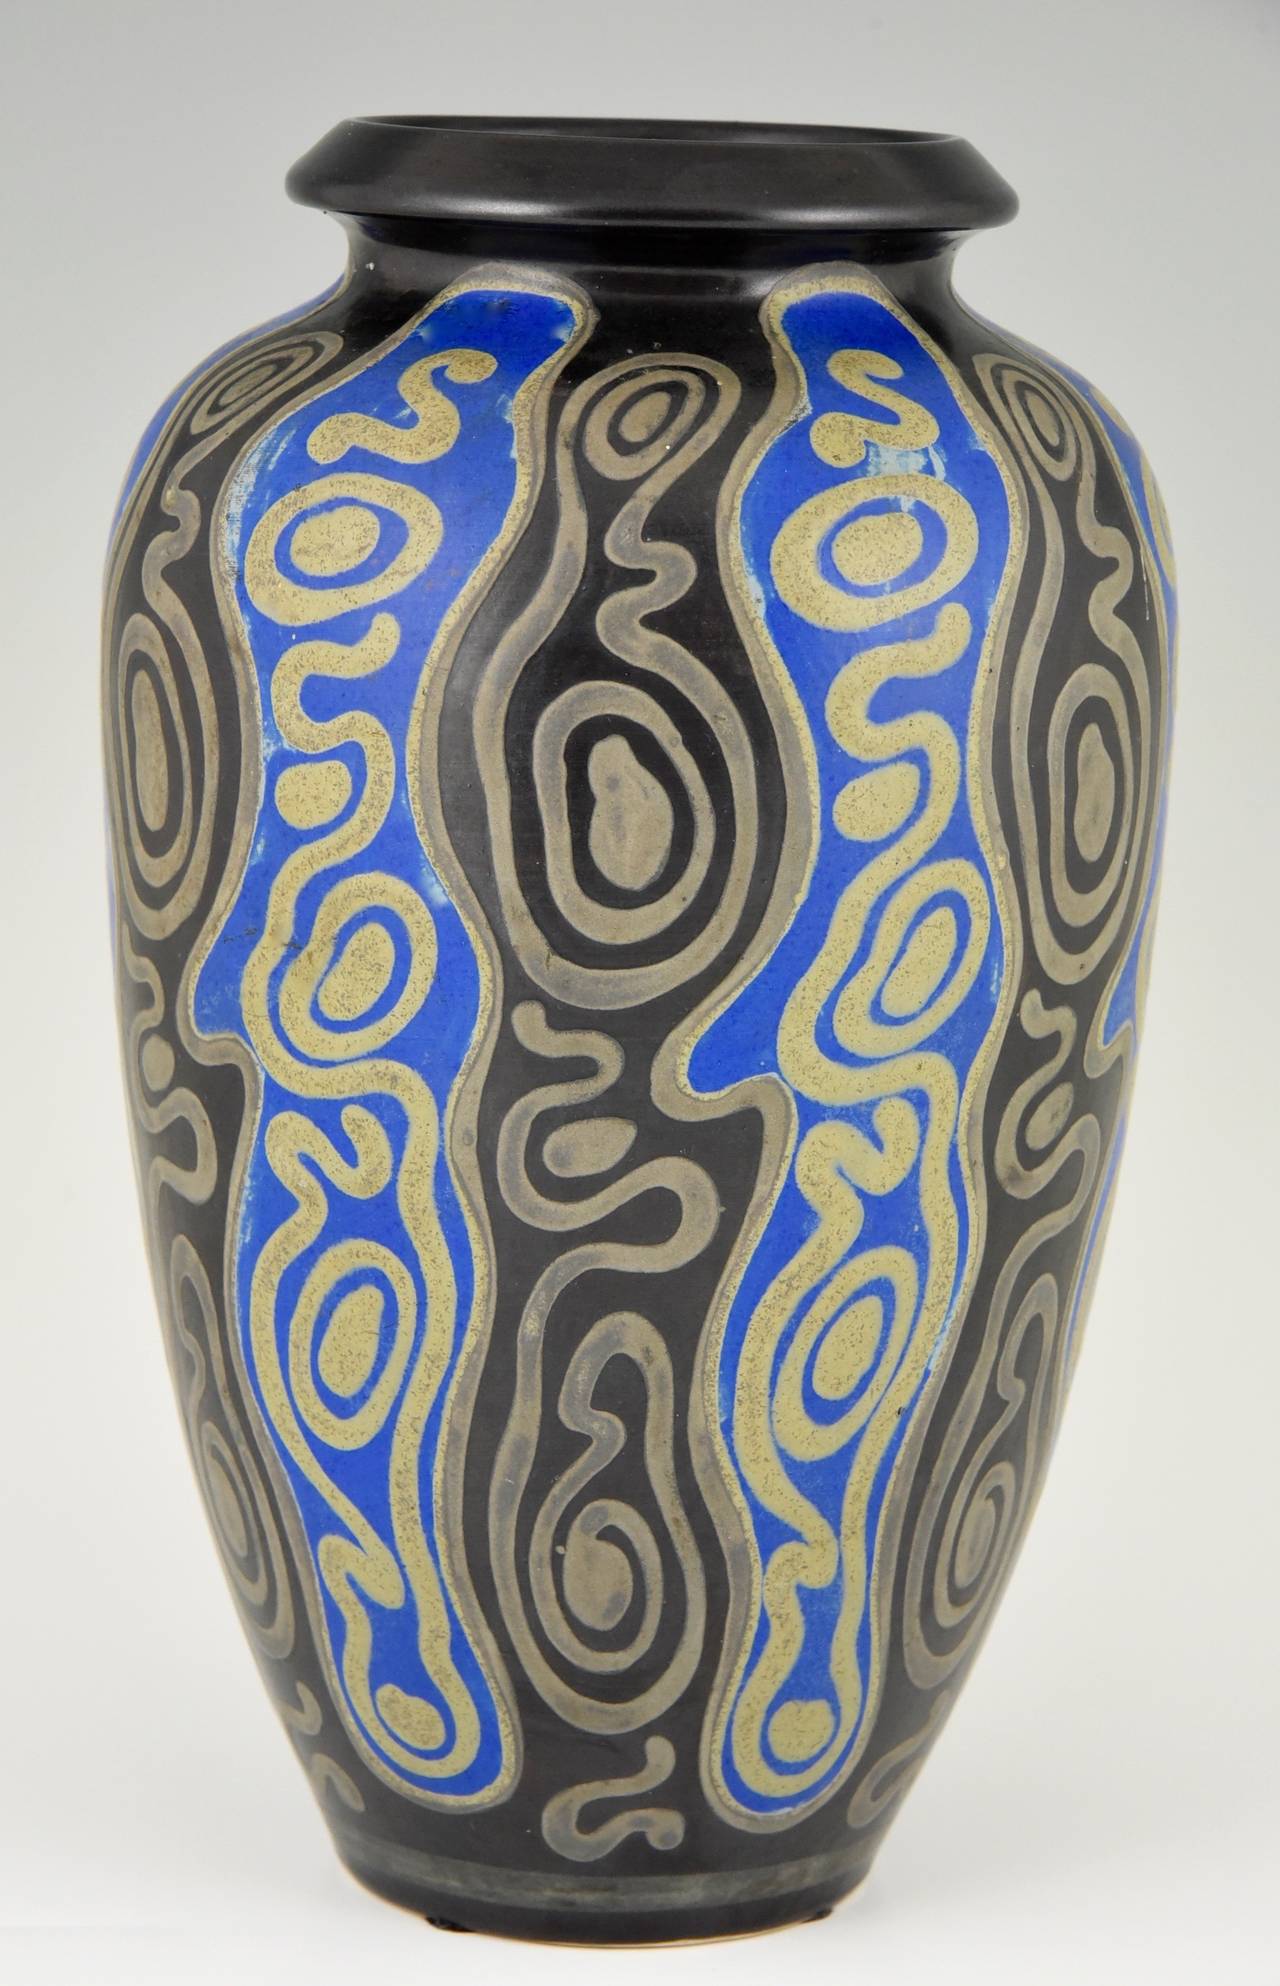 Description:  Art Deco vase with blue, grey and black decorations. 
Artist/ Maker: Charles Catteau.
Signature/ Marks: Ch Catteau, D 995, Grès Keramis, Boch freres stamp. 914. 
Style:  Art Deco.
Date:  1924/1925.
Material: Grès,